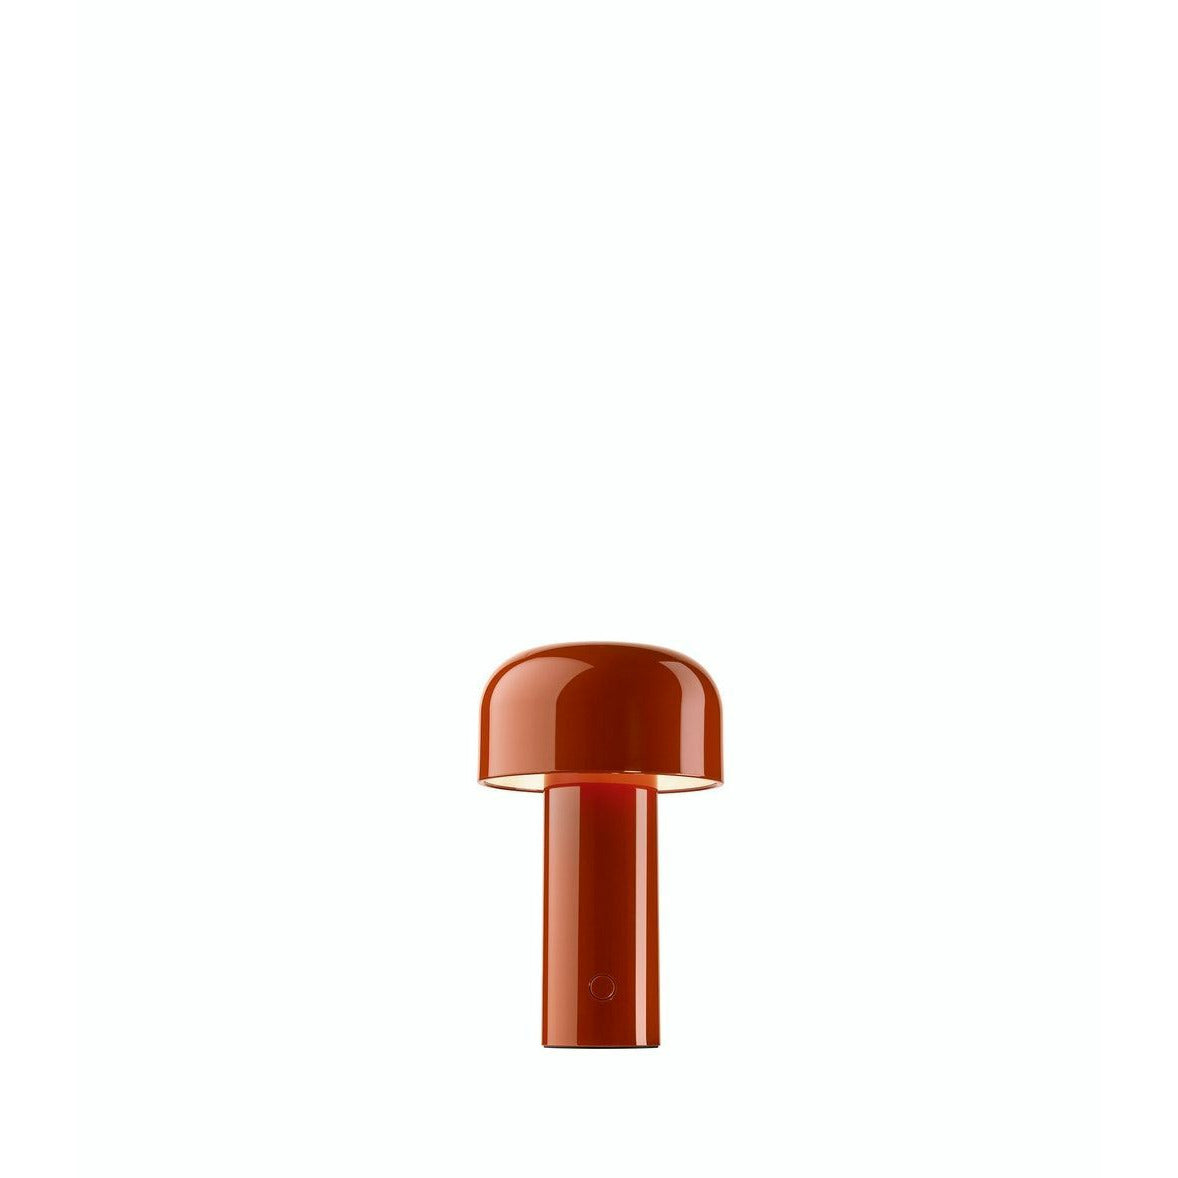 Flos Bellhop Tischlampe, rot